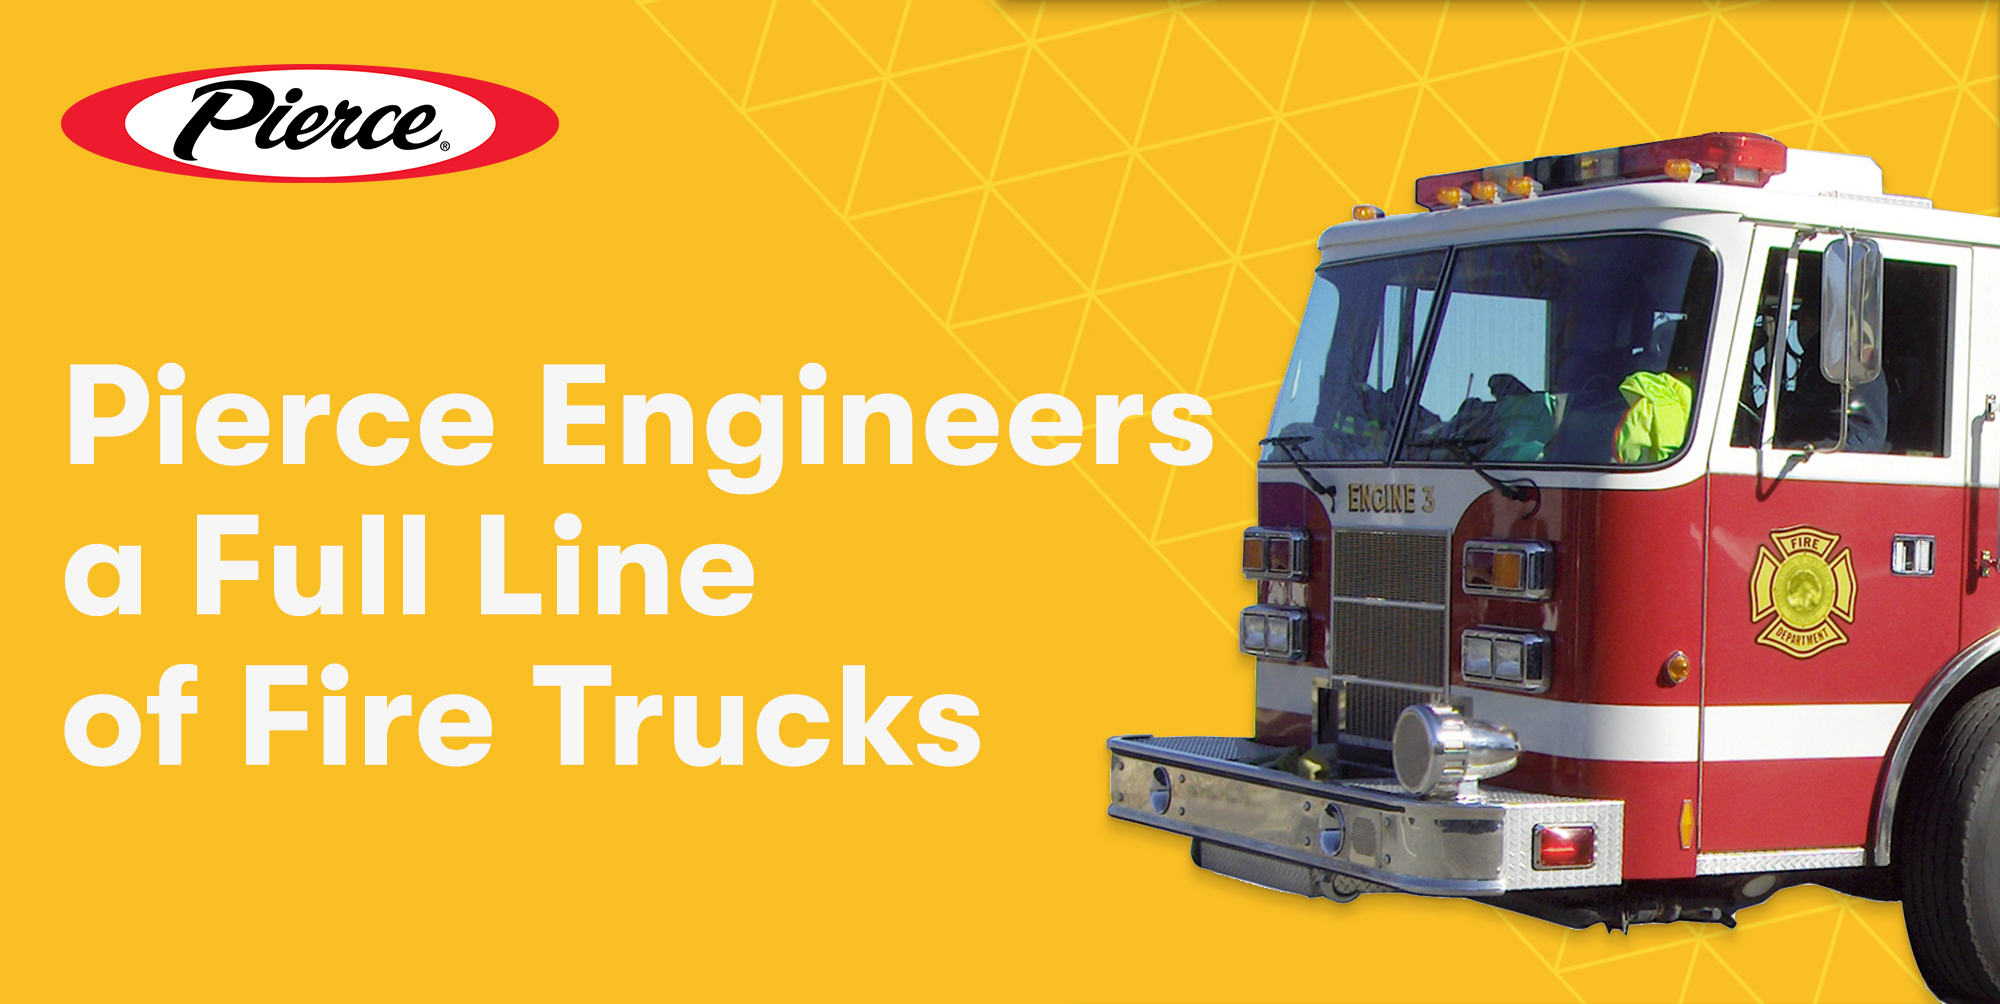 Pierce Engineers a Full Line of Firetrucks to Serve Communities